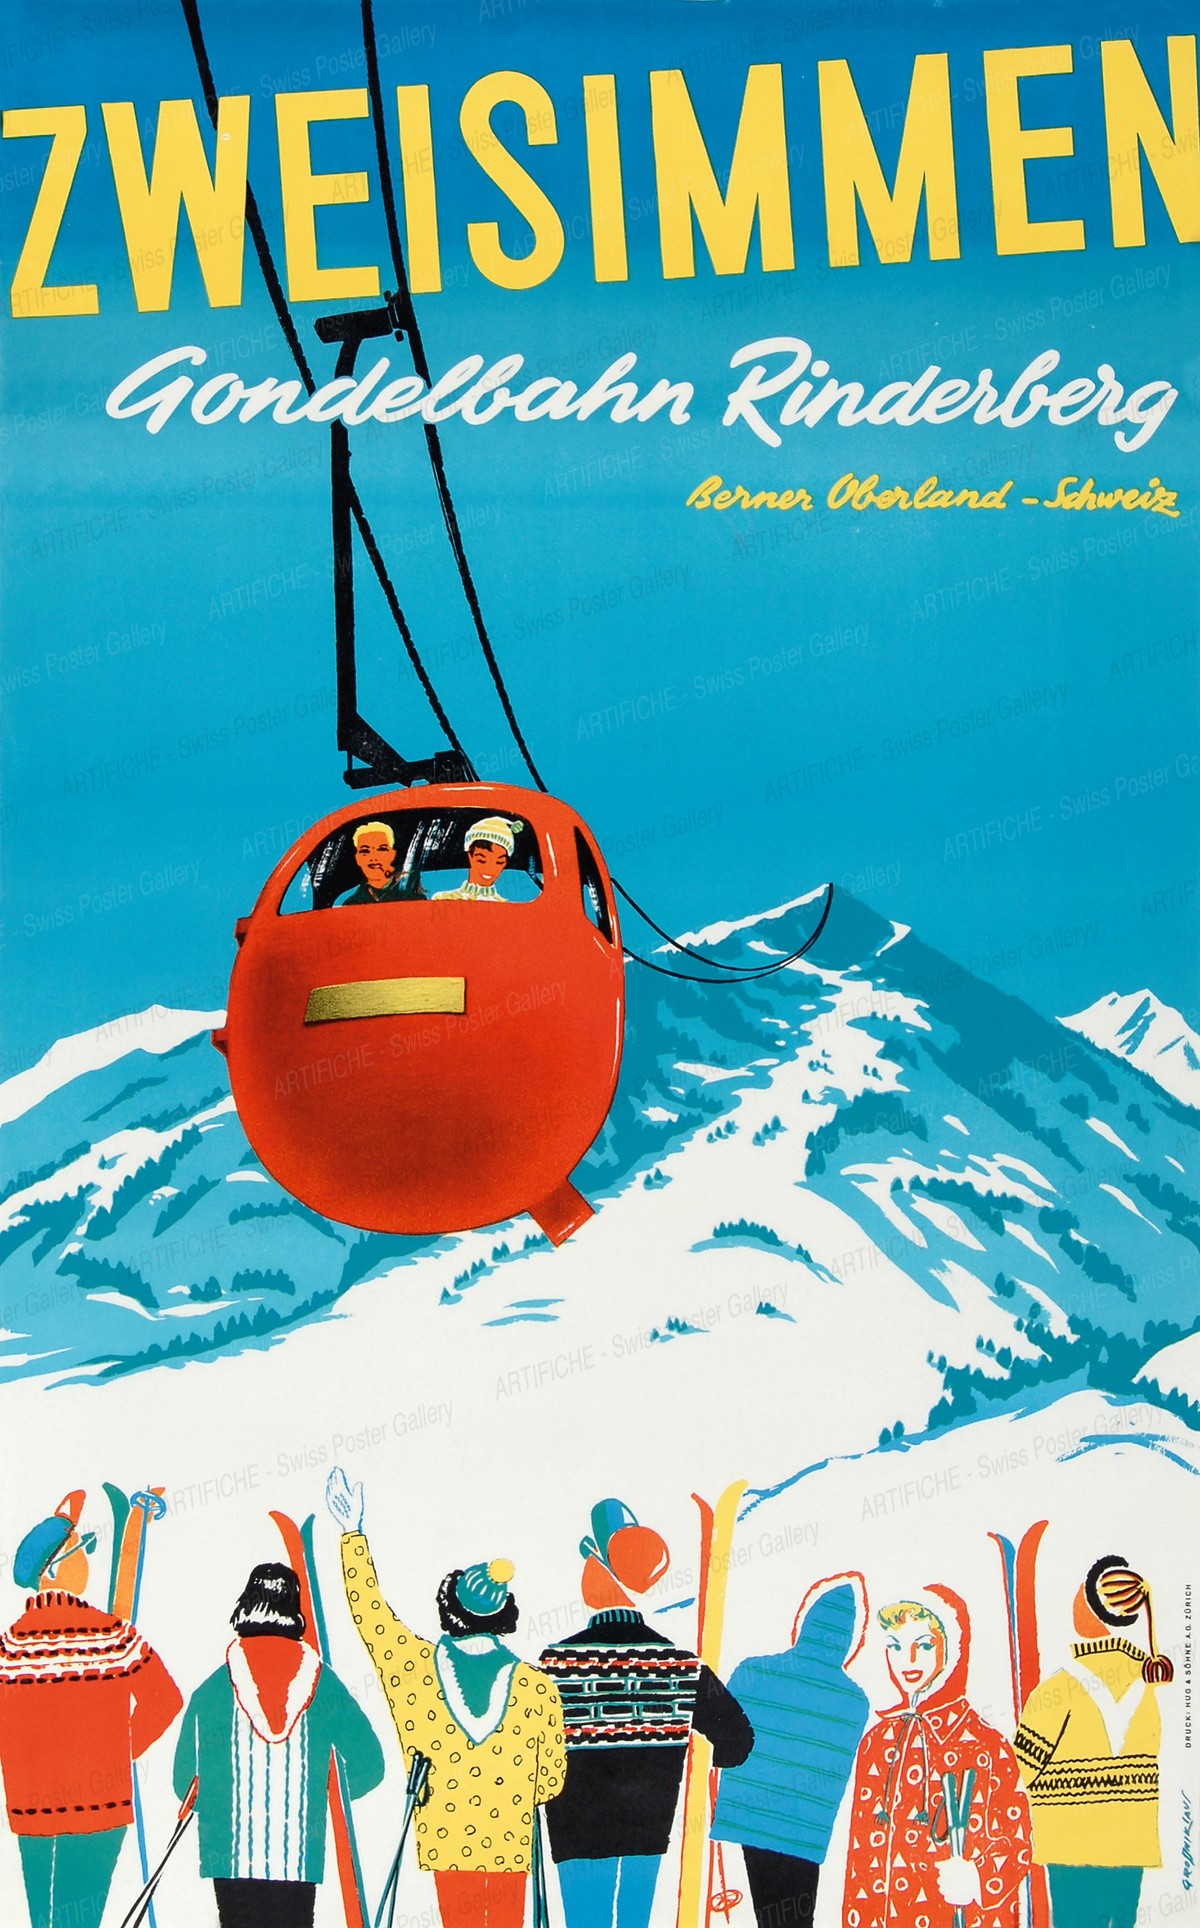 ZWEISIMMEN – Gondelbahn Rinderberg – Berner Oberland – Schweiz, Grossniklaus